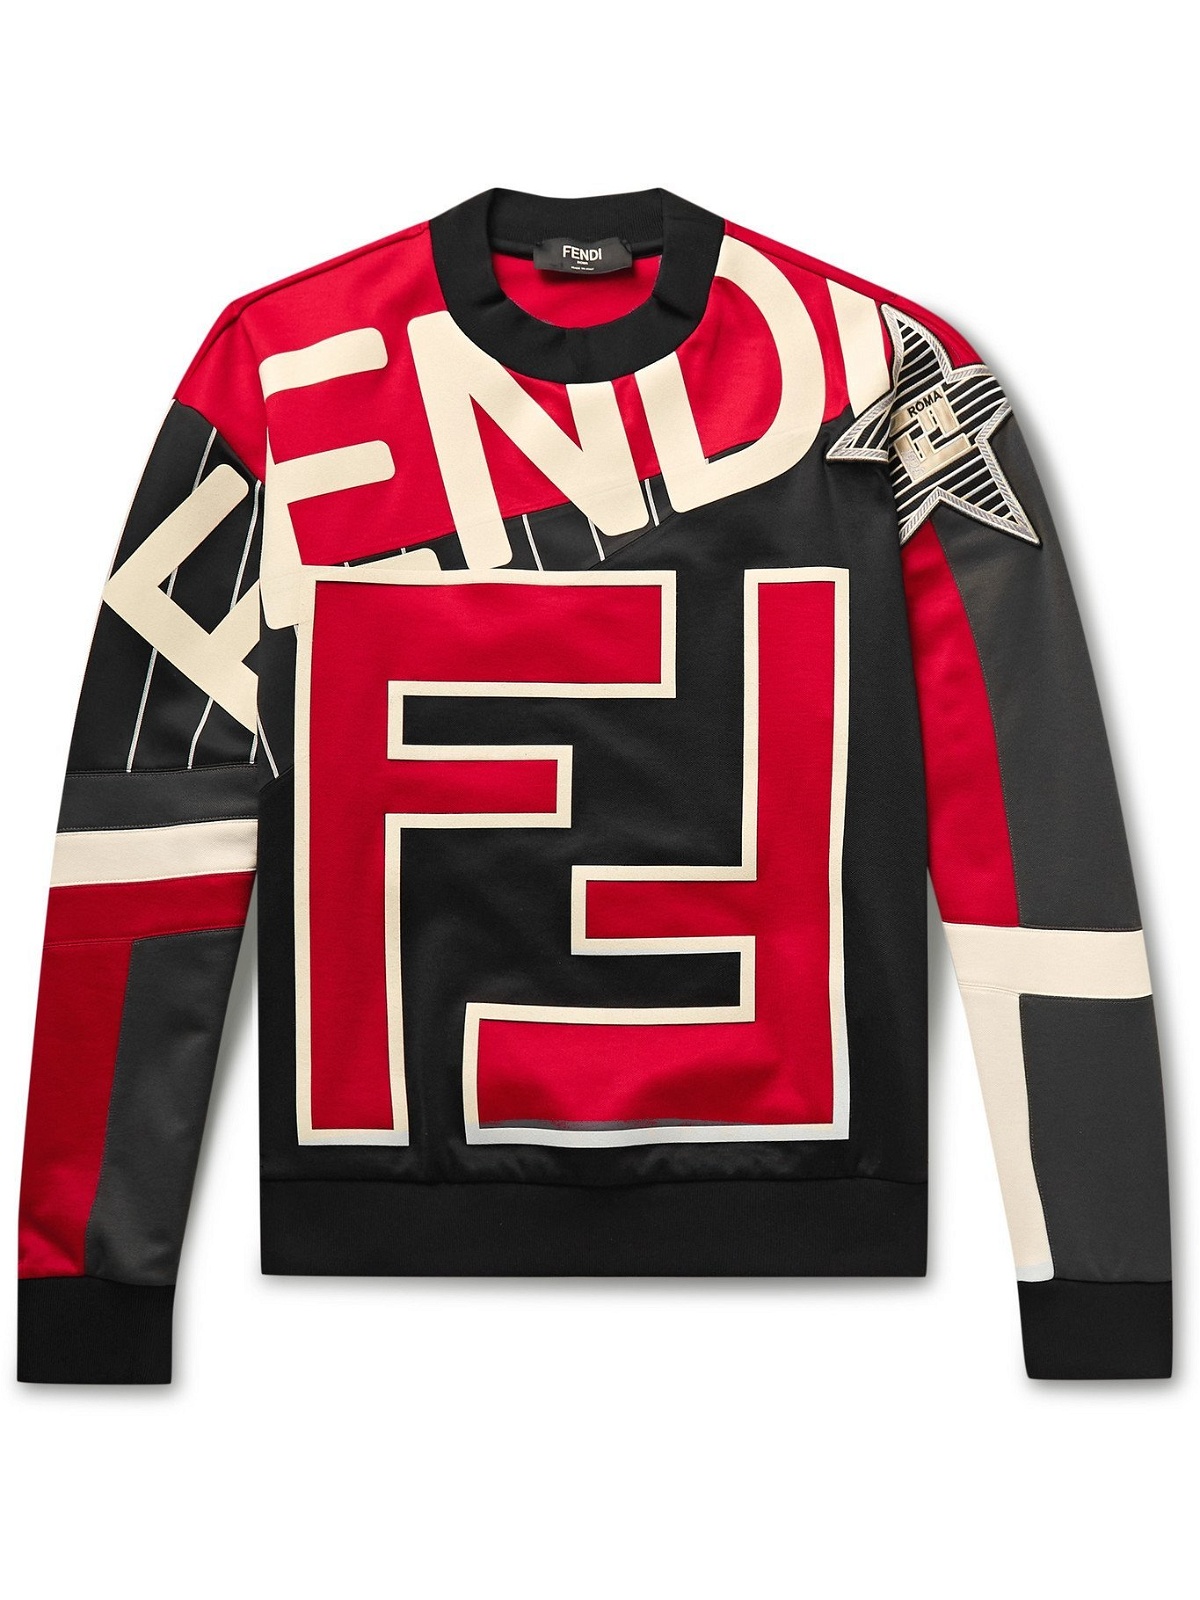 FENDI - Appliquéd Sweatshirt - Fendi